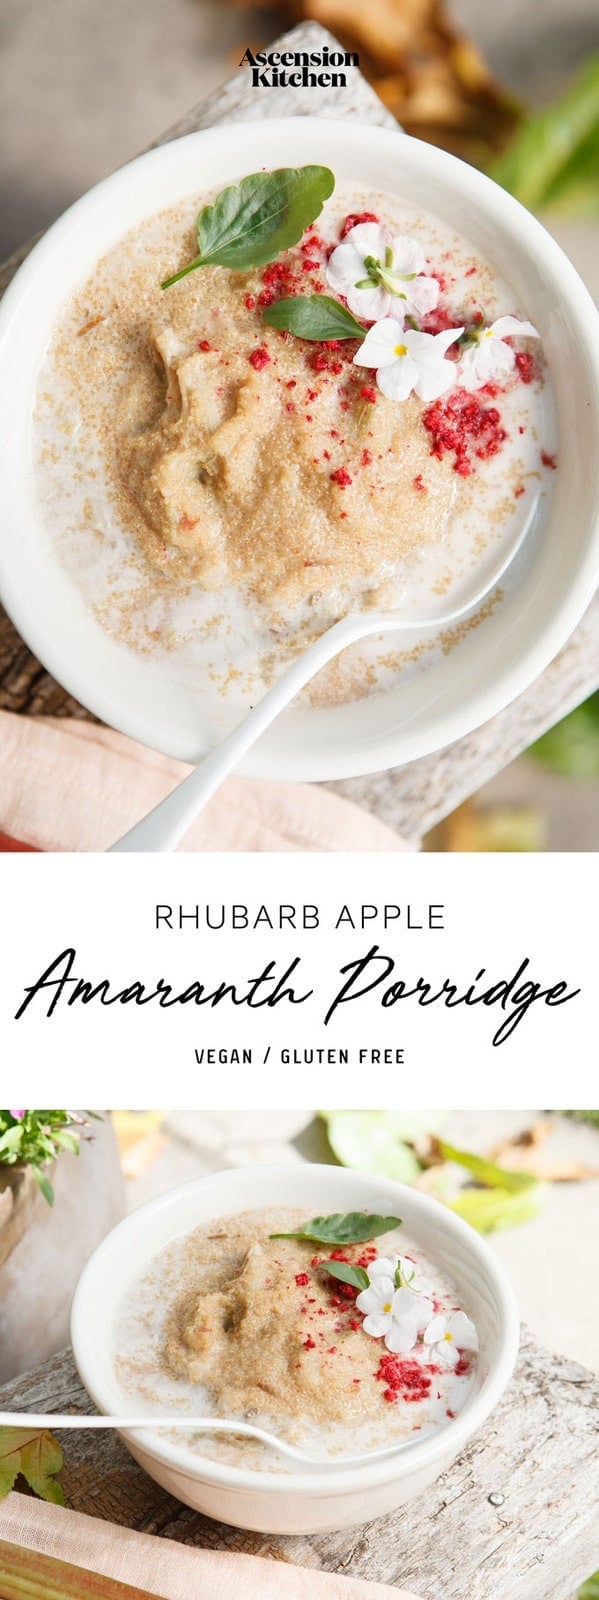 Creamy Rhubarb Apple Amaranth Porridge – a nice alternative to oats. #amaranthporridge #amaranthporridgerecipe #amaranthporridgevegan #amaranthporridgehealthy #amaranthporridgecoconutmilk #amaranthbenefits #glutenfreeporridge #AscensionKitchen // Pin to your own inspiration board! //